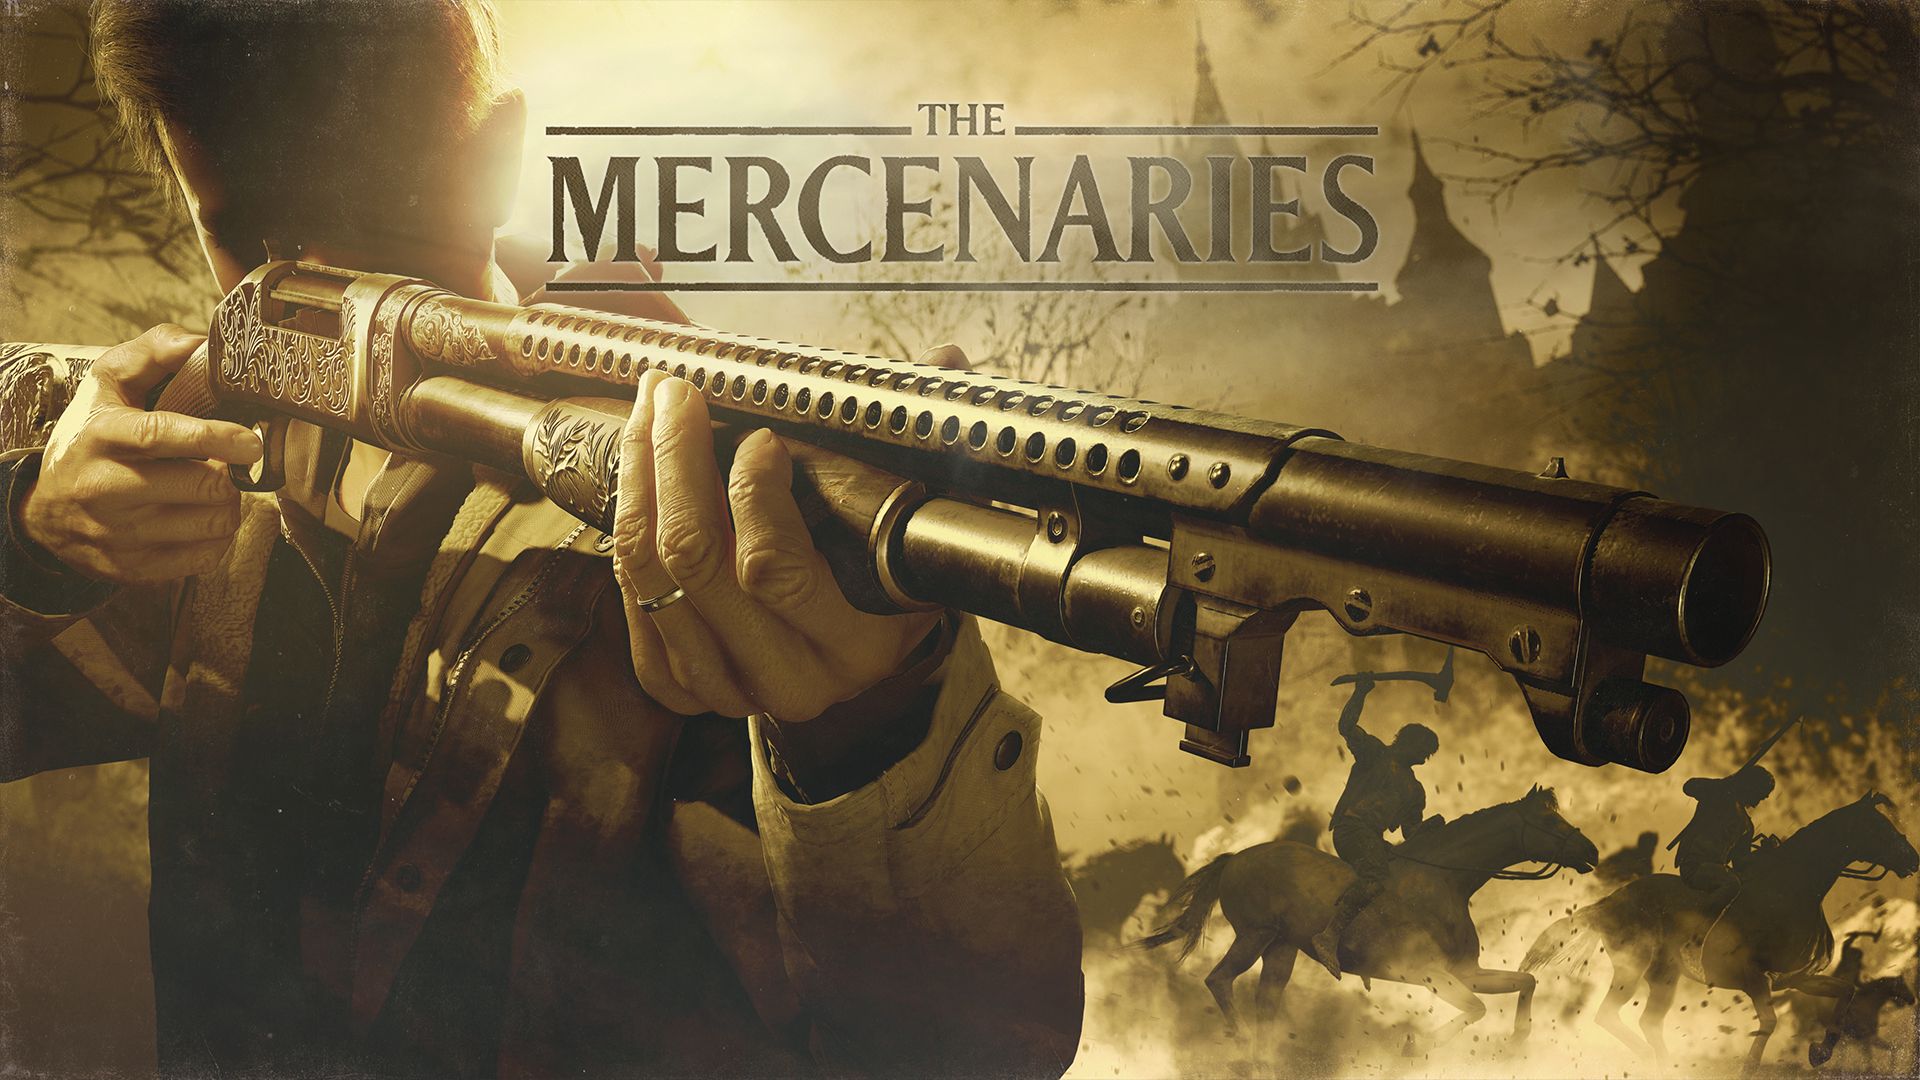 List of Mercenaries Characters and Abilities